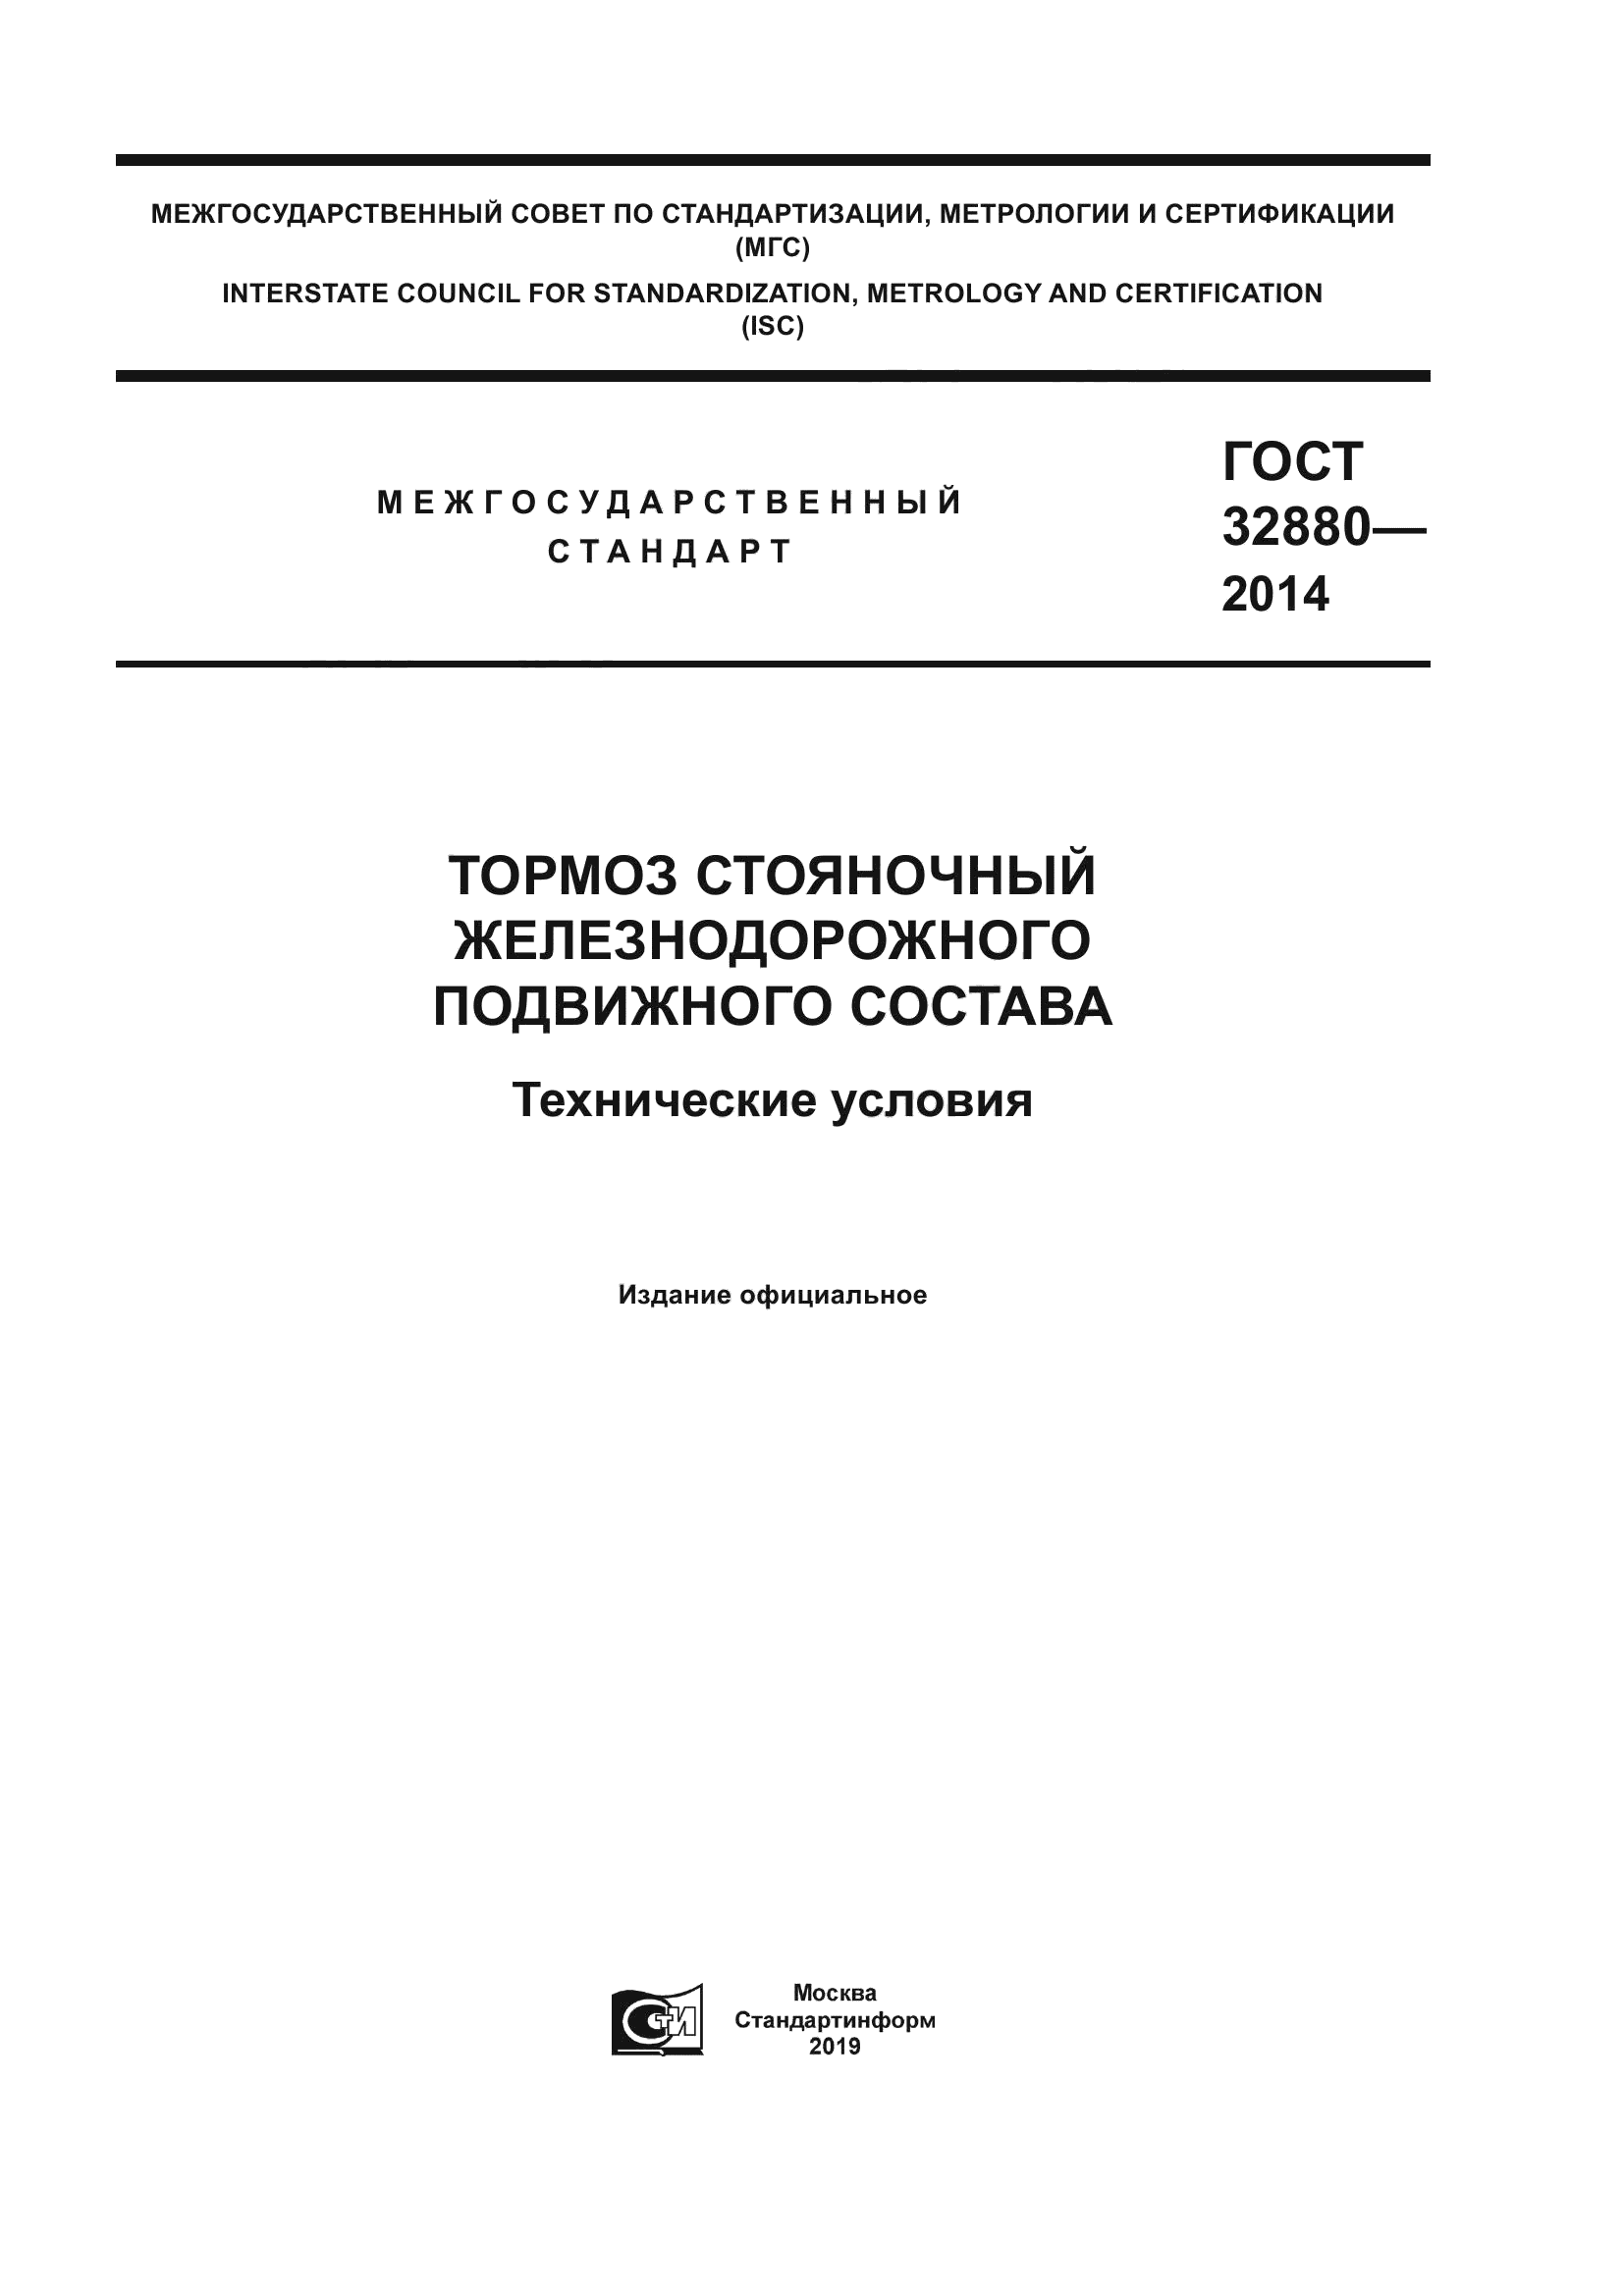 ГОСТ 32880-2014